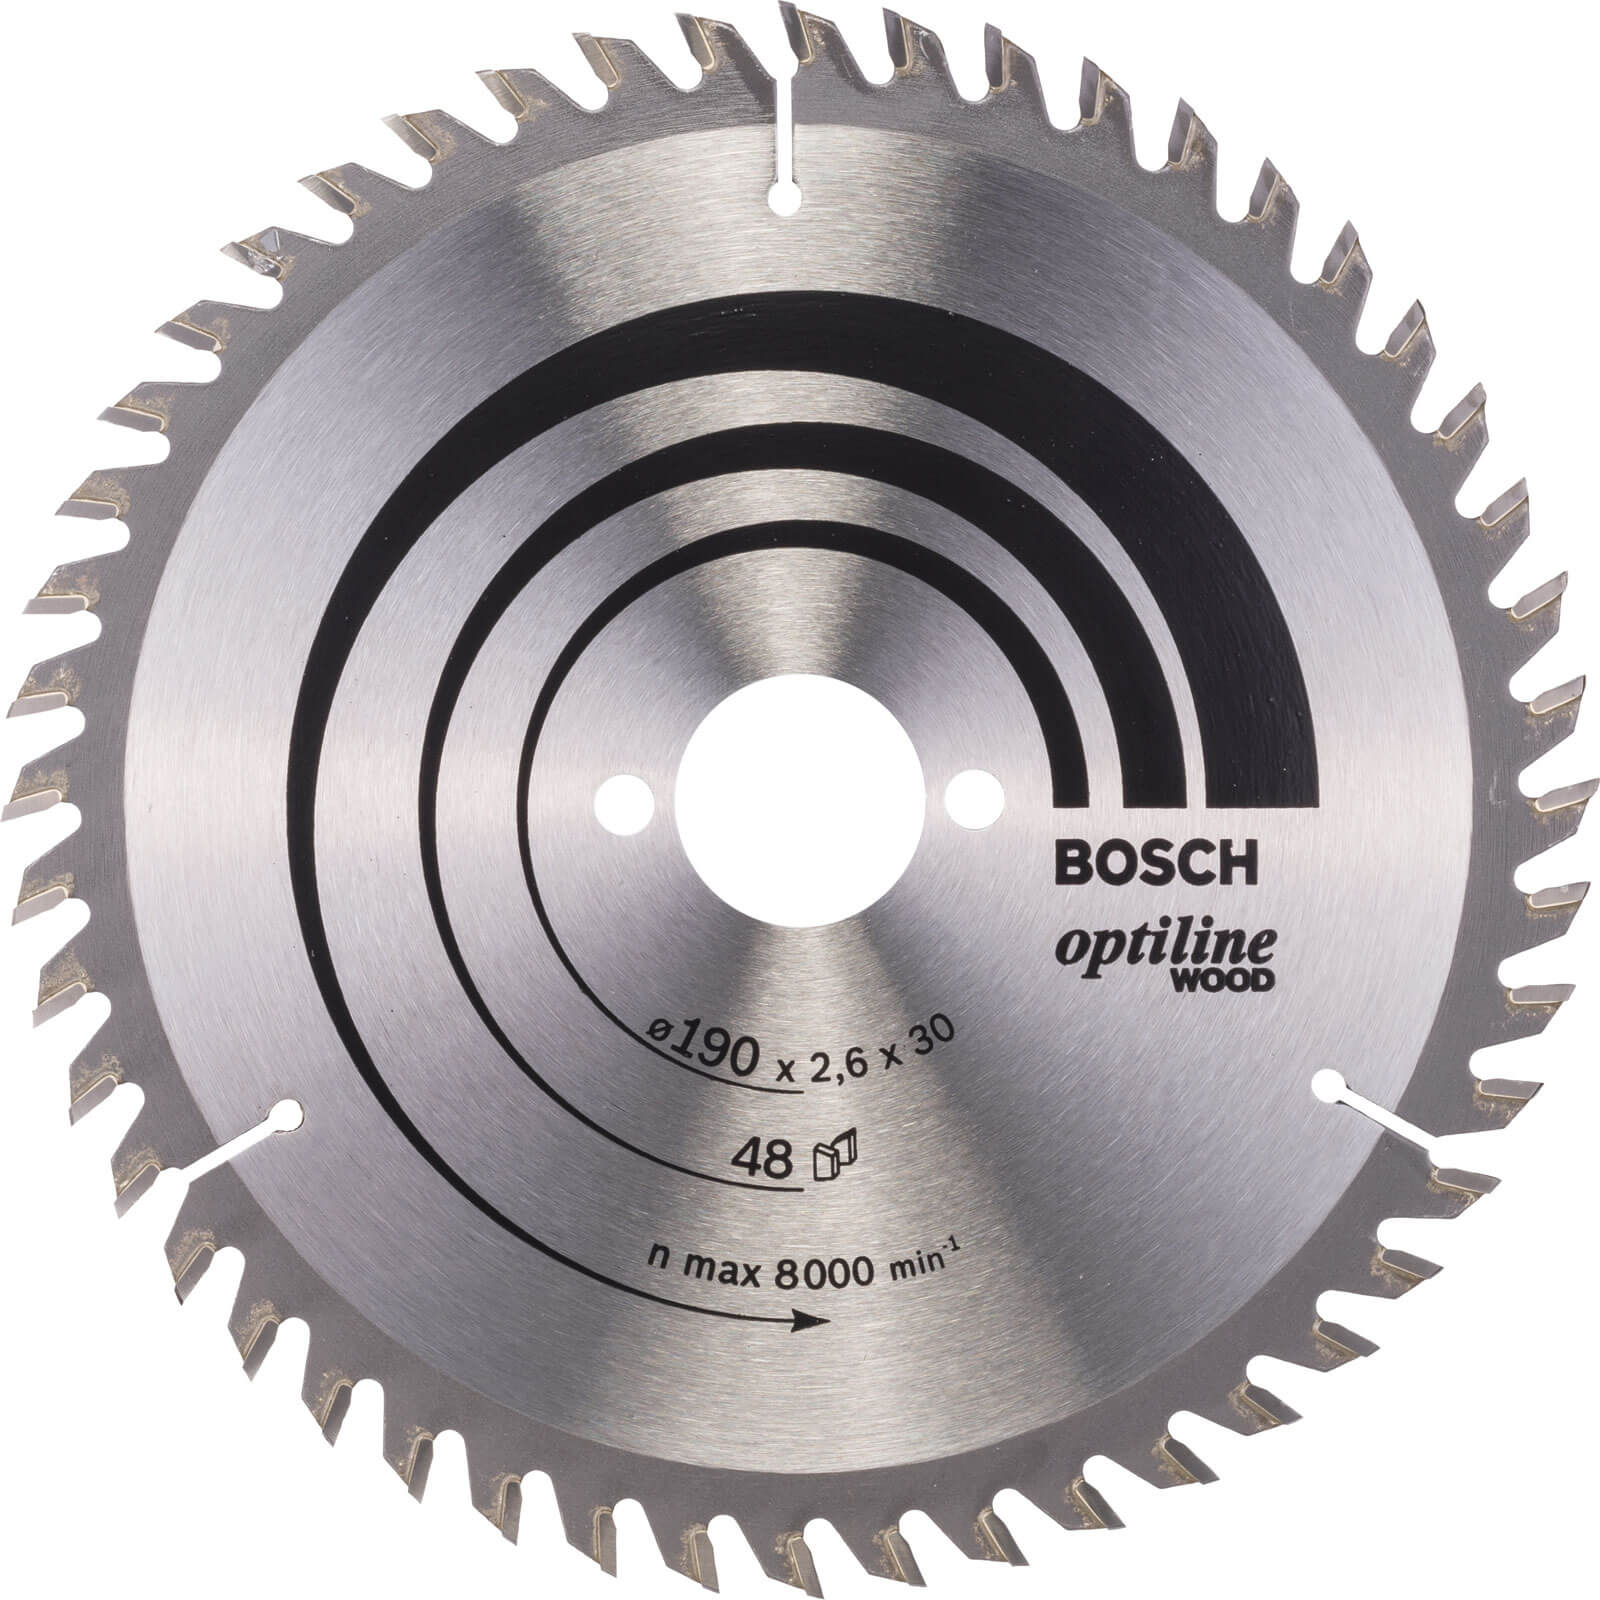 Photo of Bosch Optiline Wood Cutting Saw Blade 190mm 48t 30mm